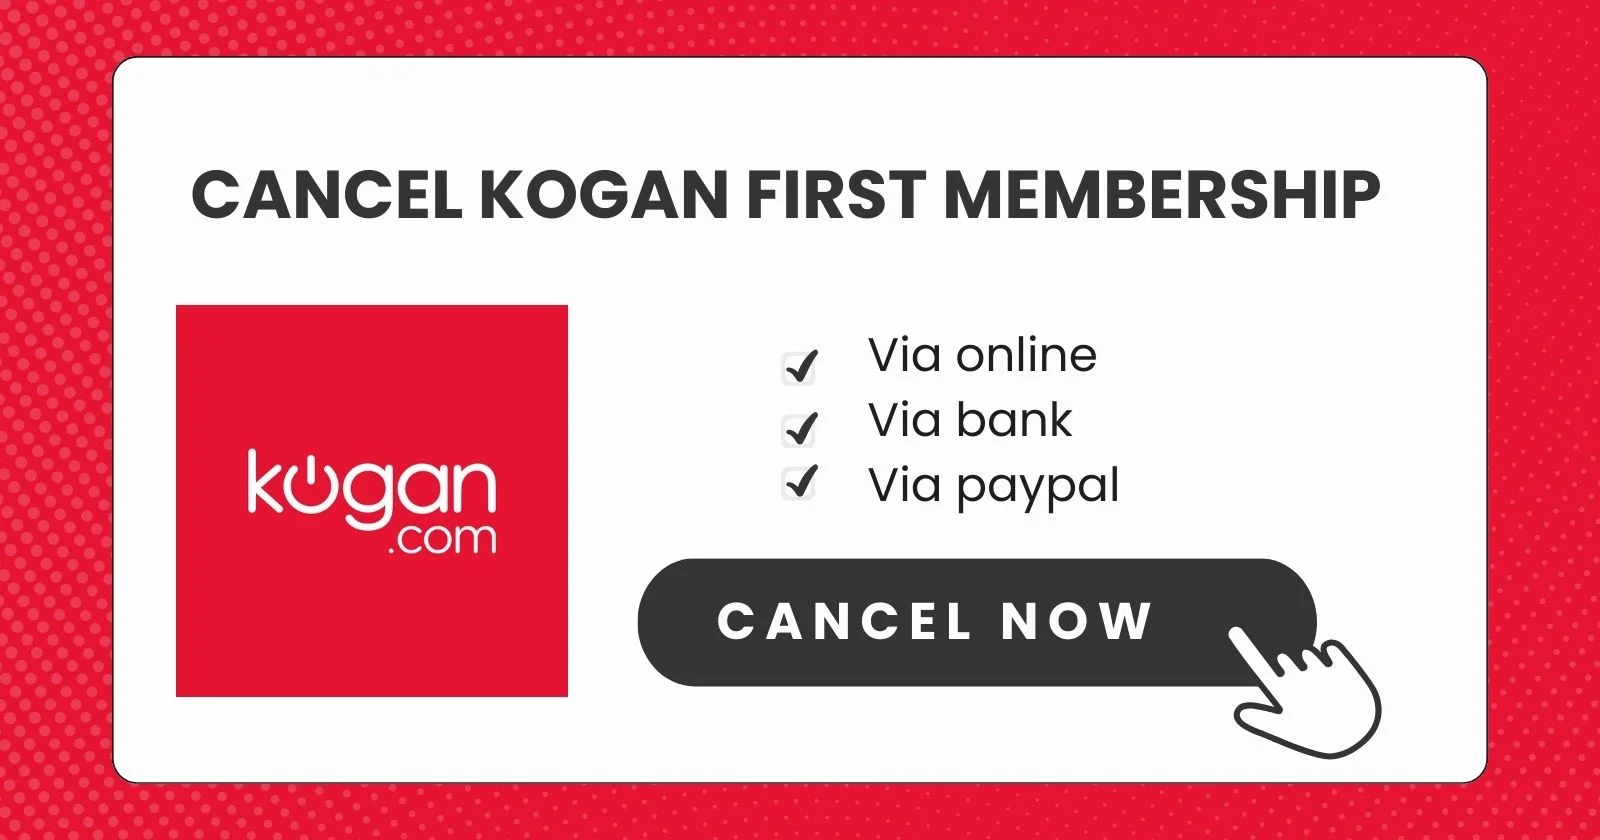 Cancel Kogan First Membership